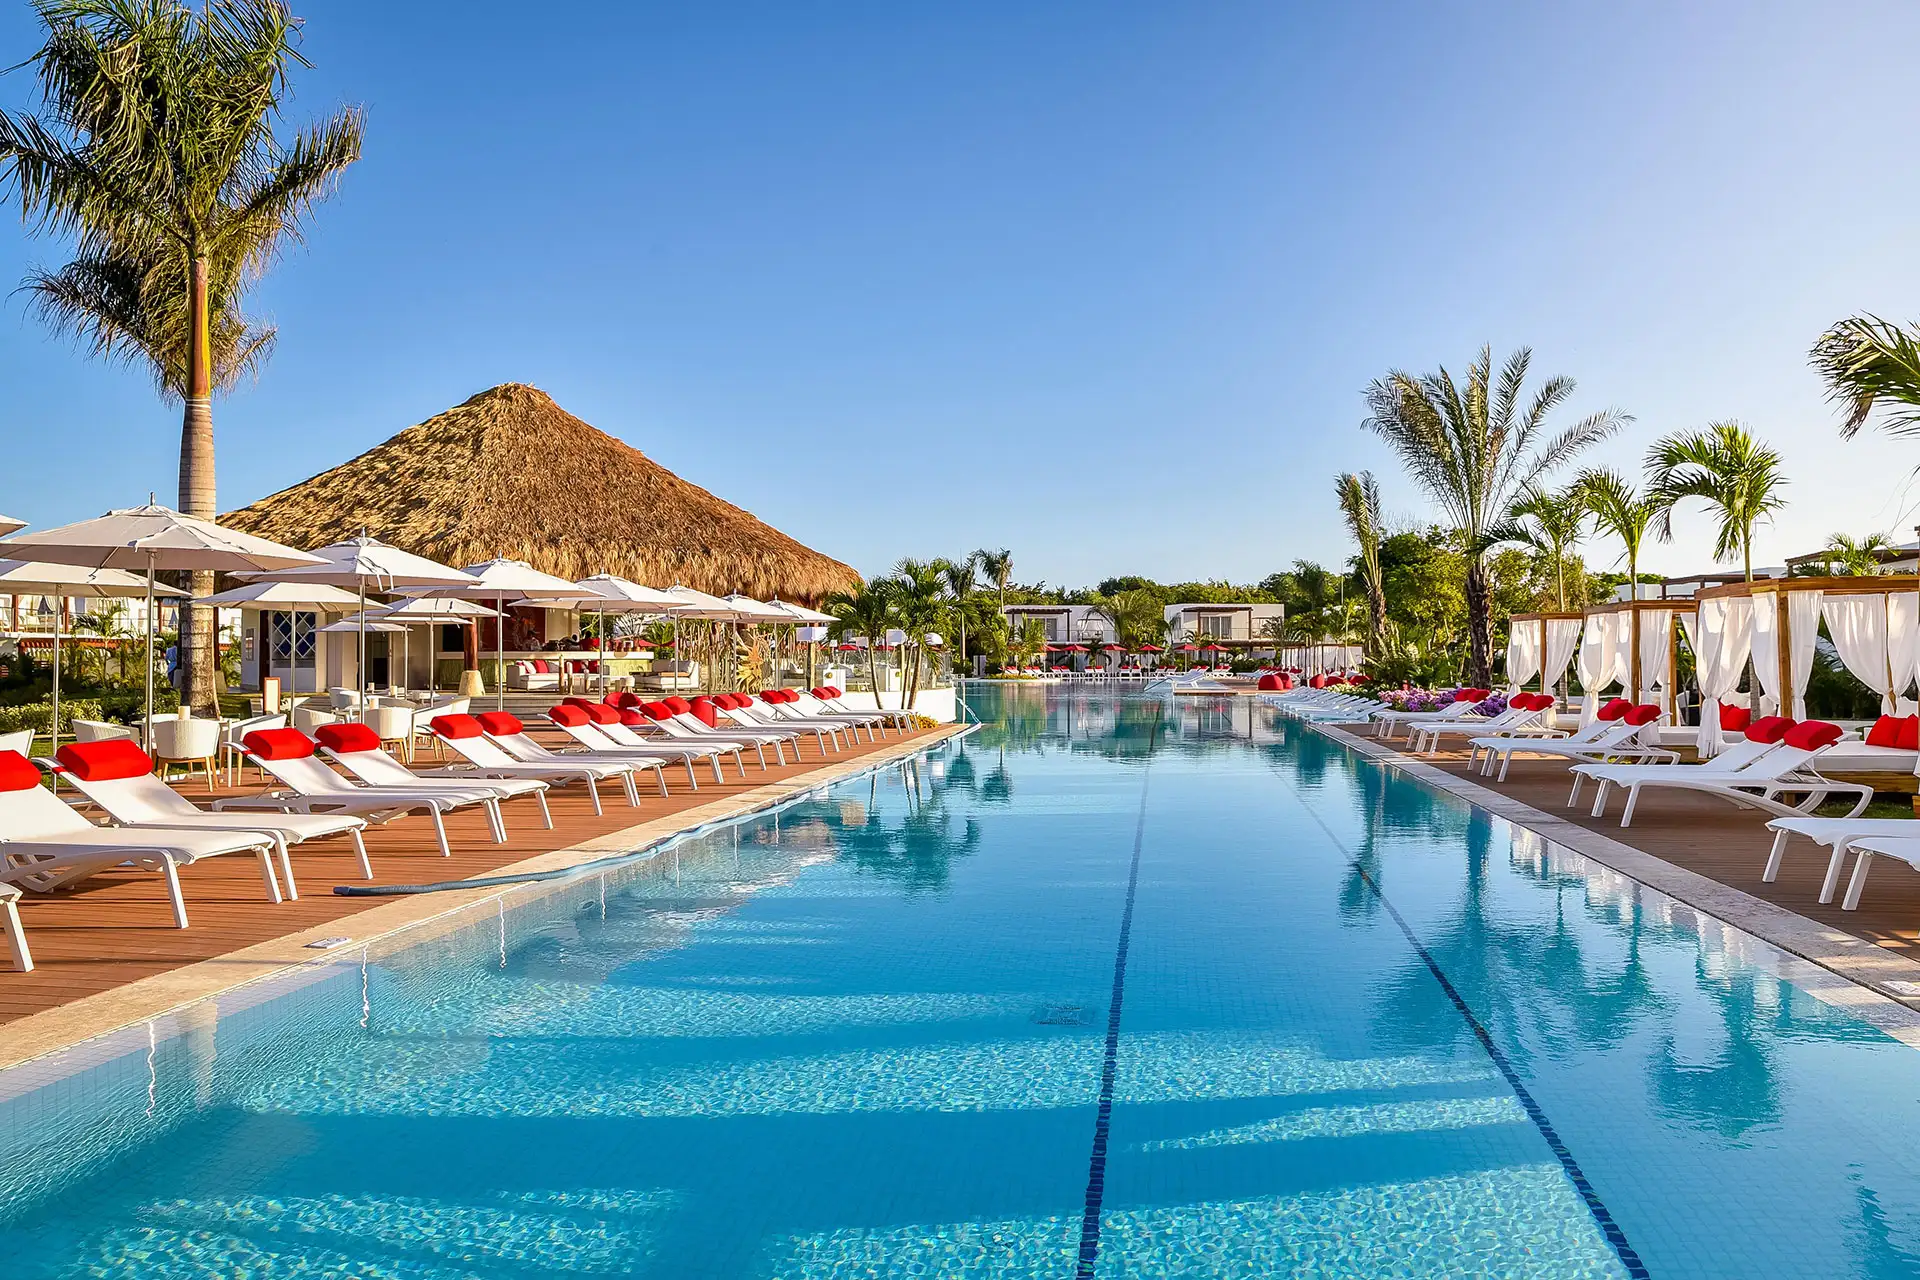 Pool at Club Med Punta Cana; Courtesy of Club Med Punta Cana